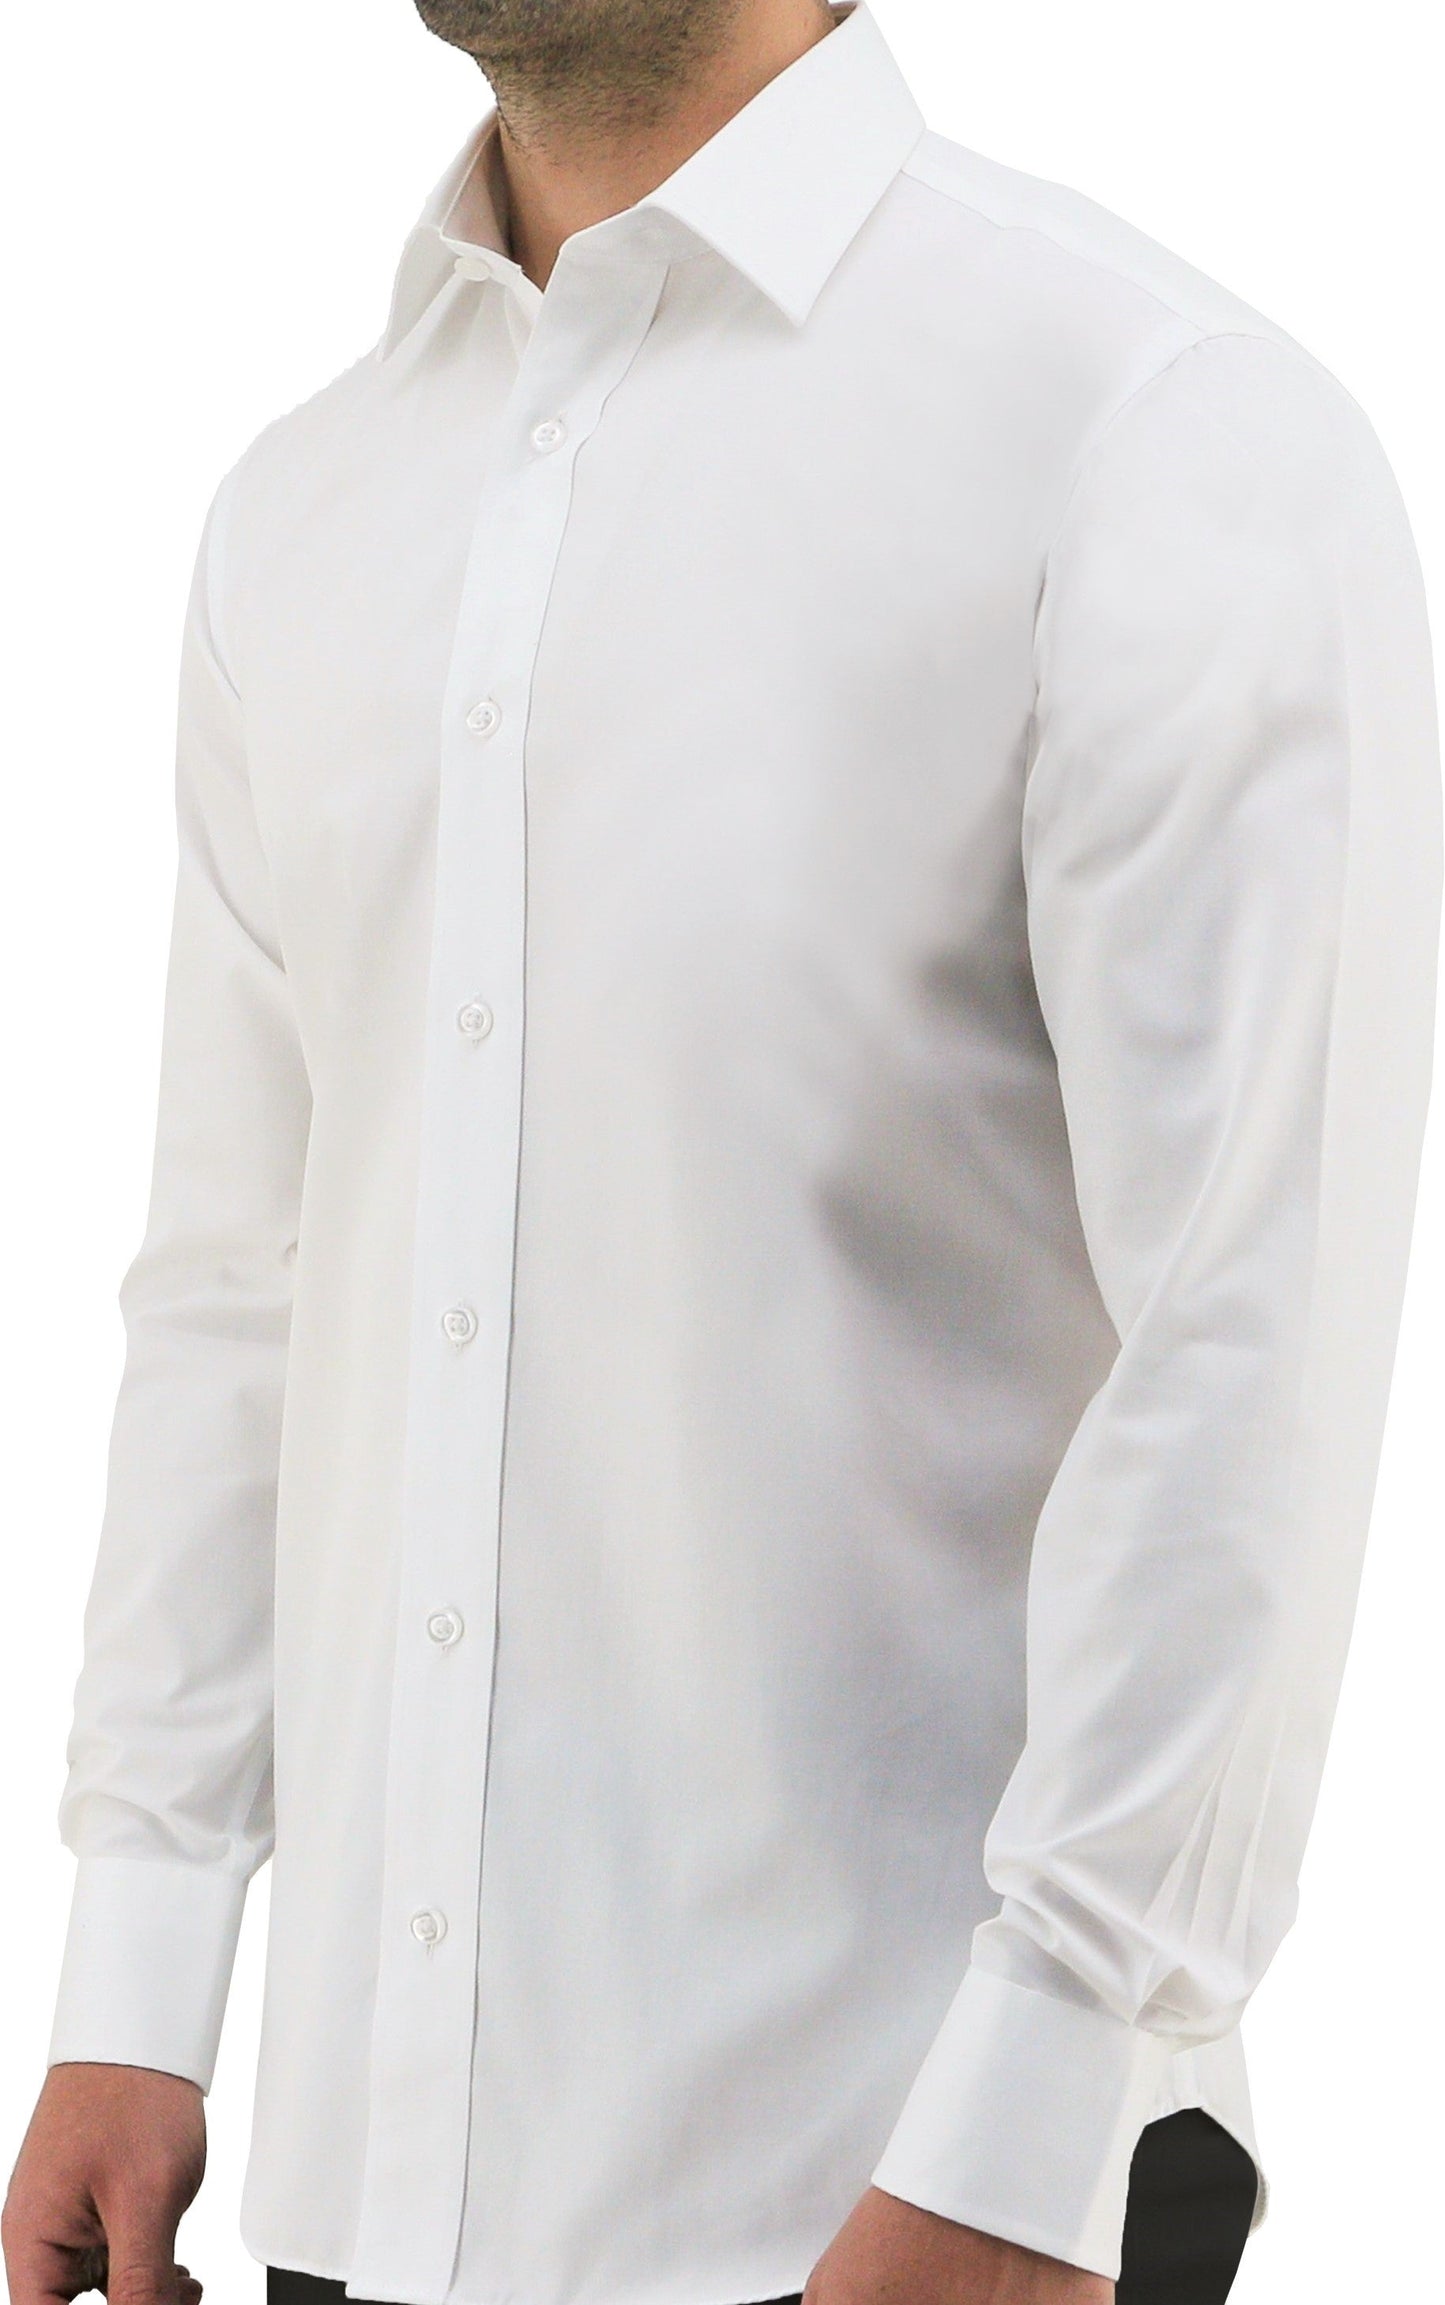 Jacque Business 5WT White Shirt